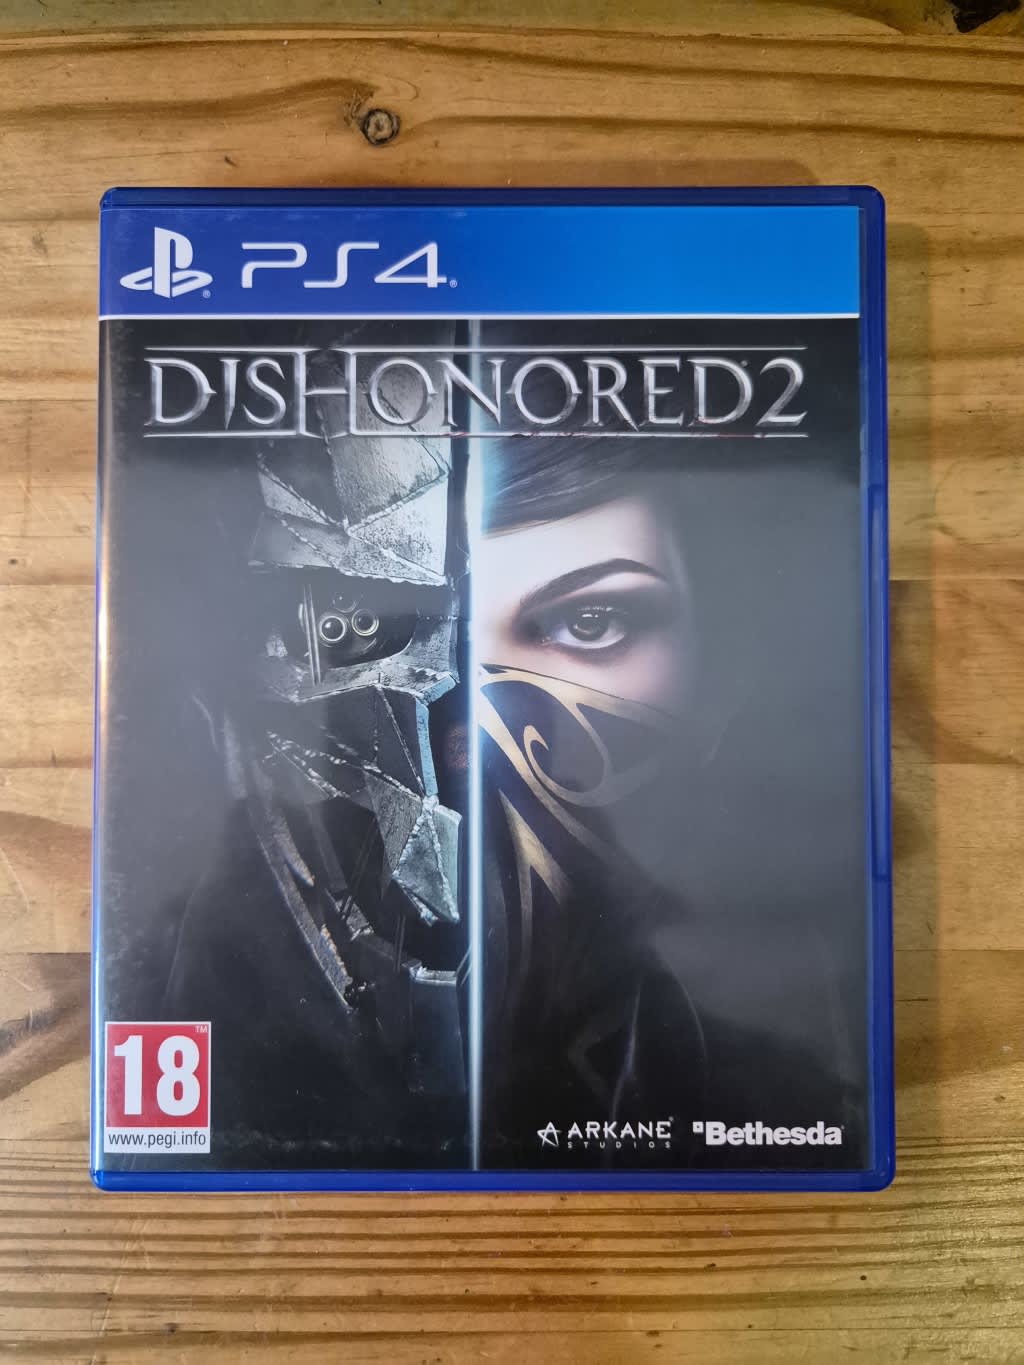  Dishonored 2